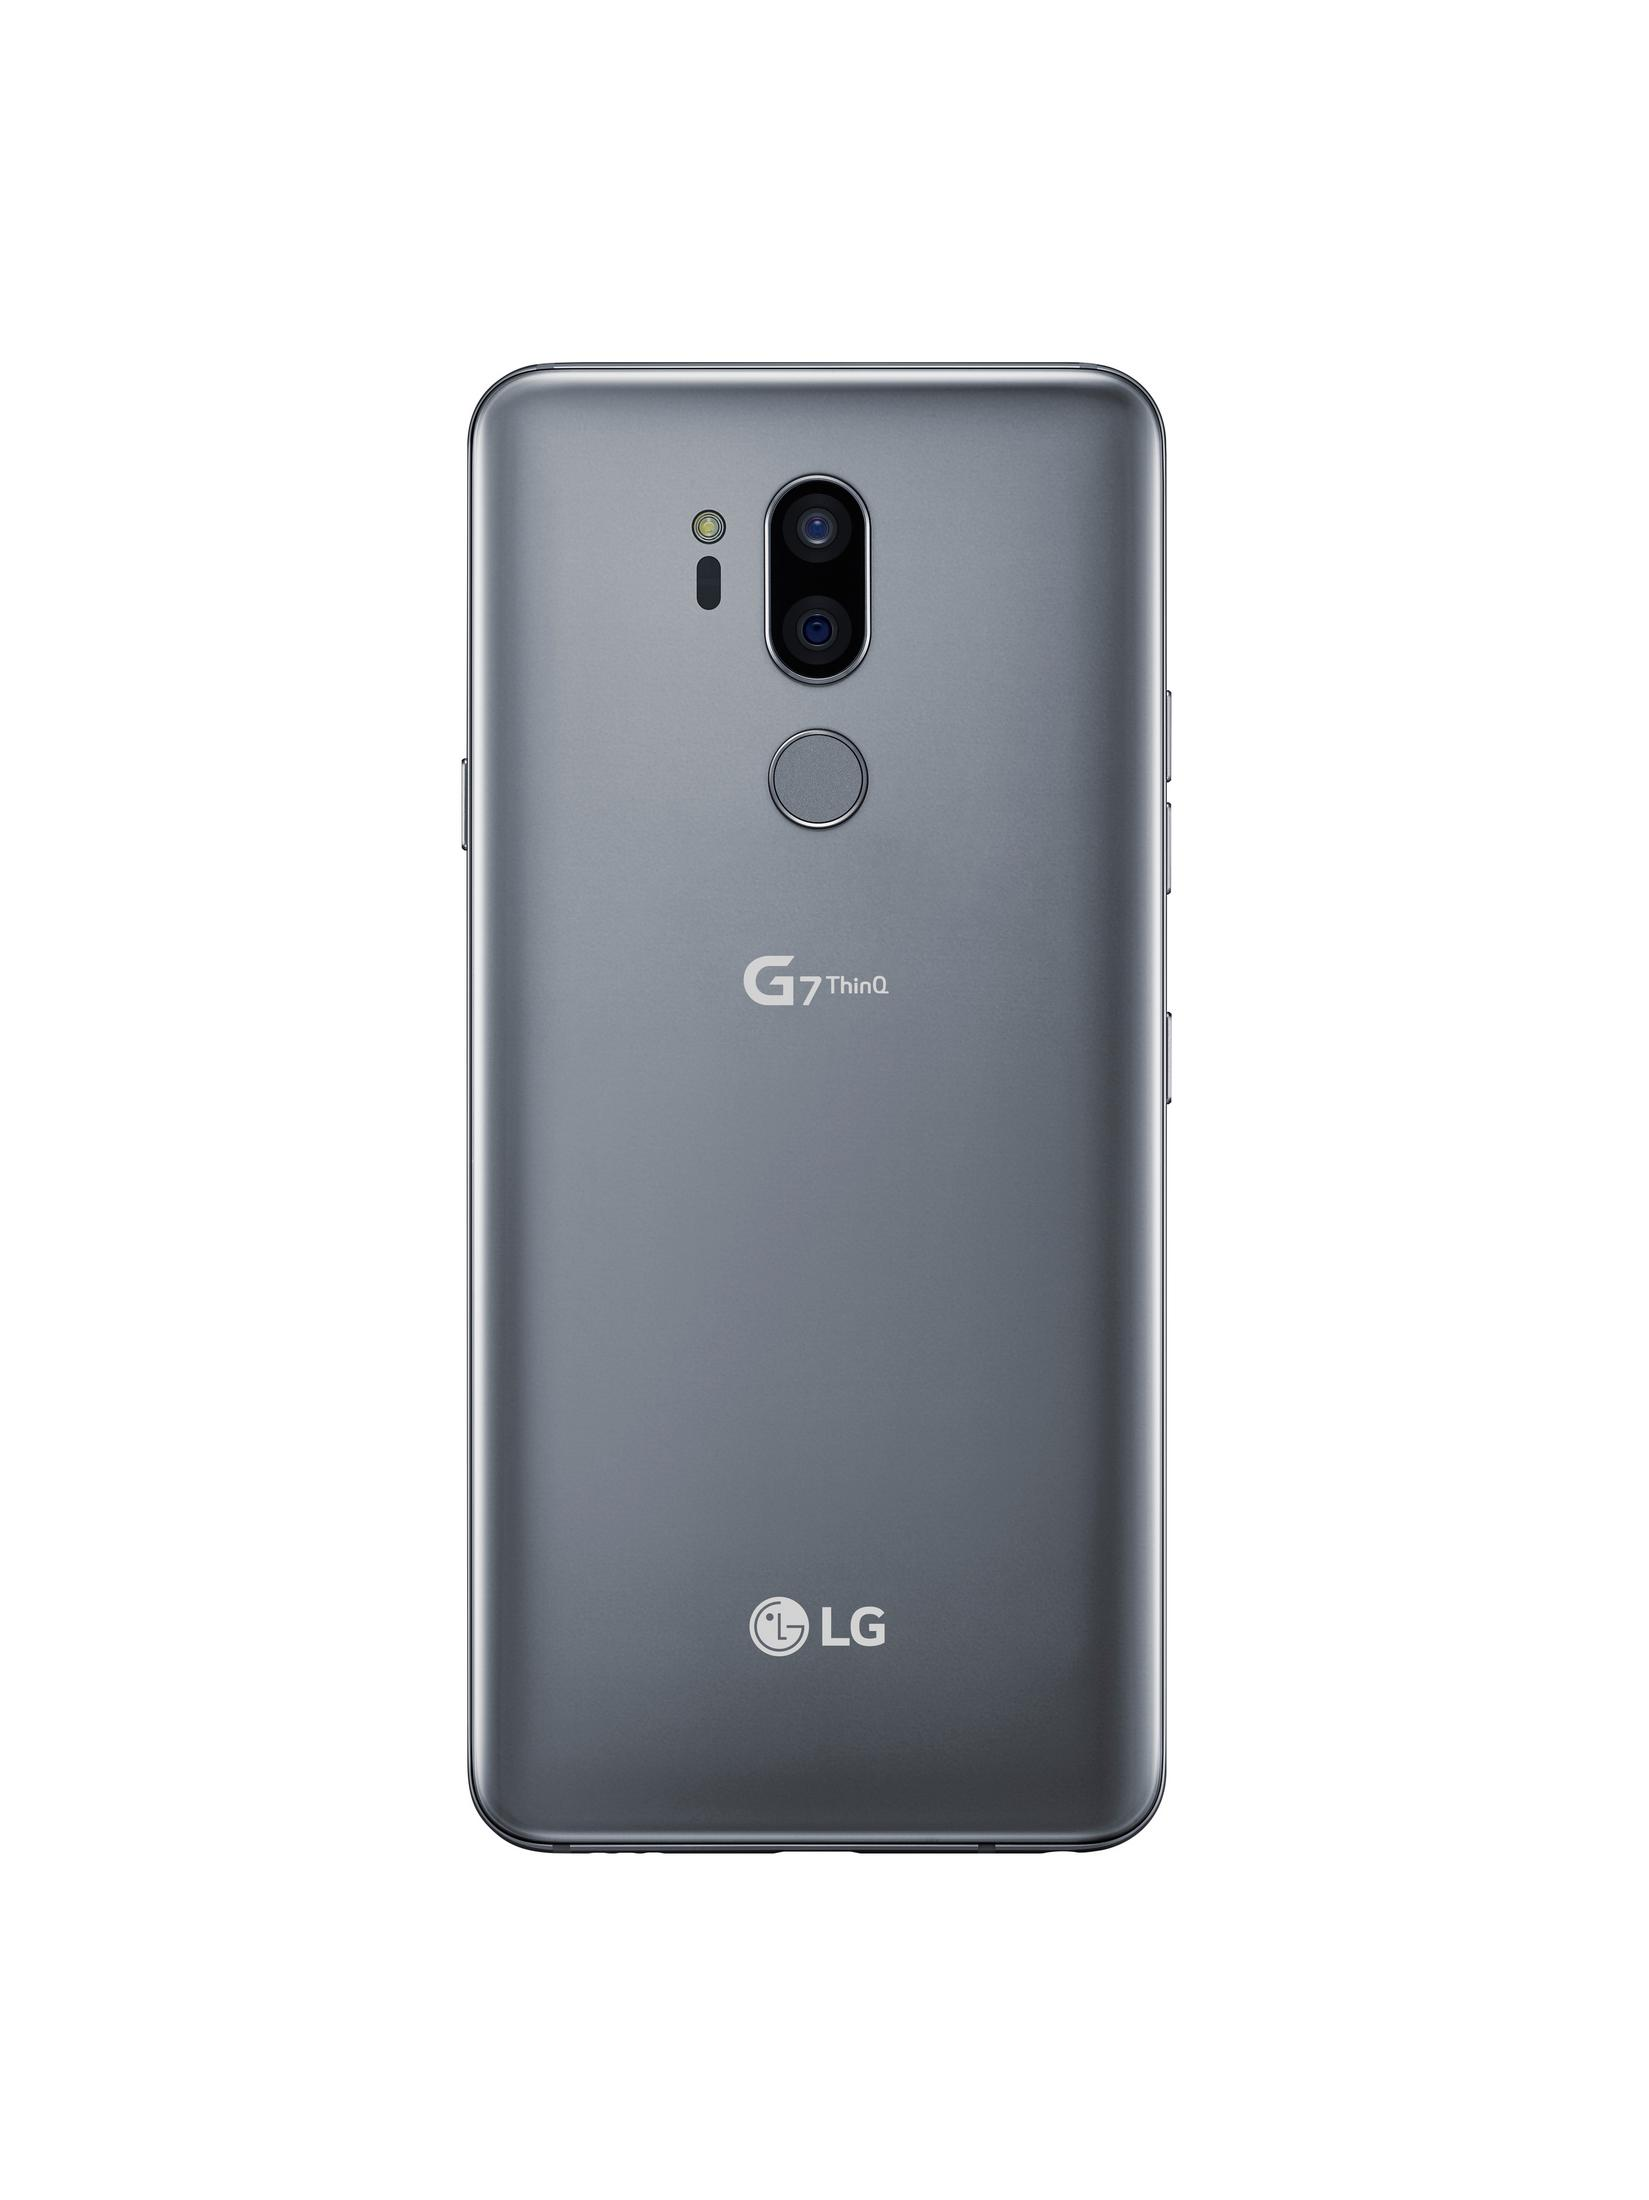 LG G7 THINQ PLATINUM GREY 64 Gray New GB Platinum